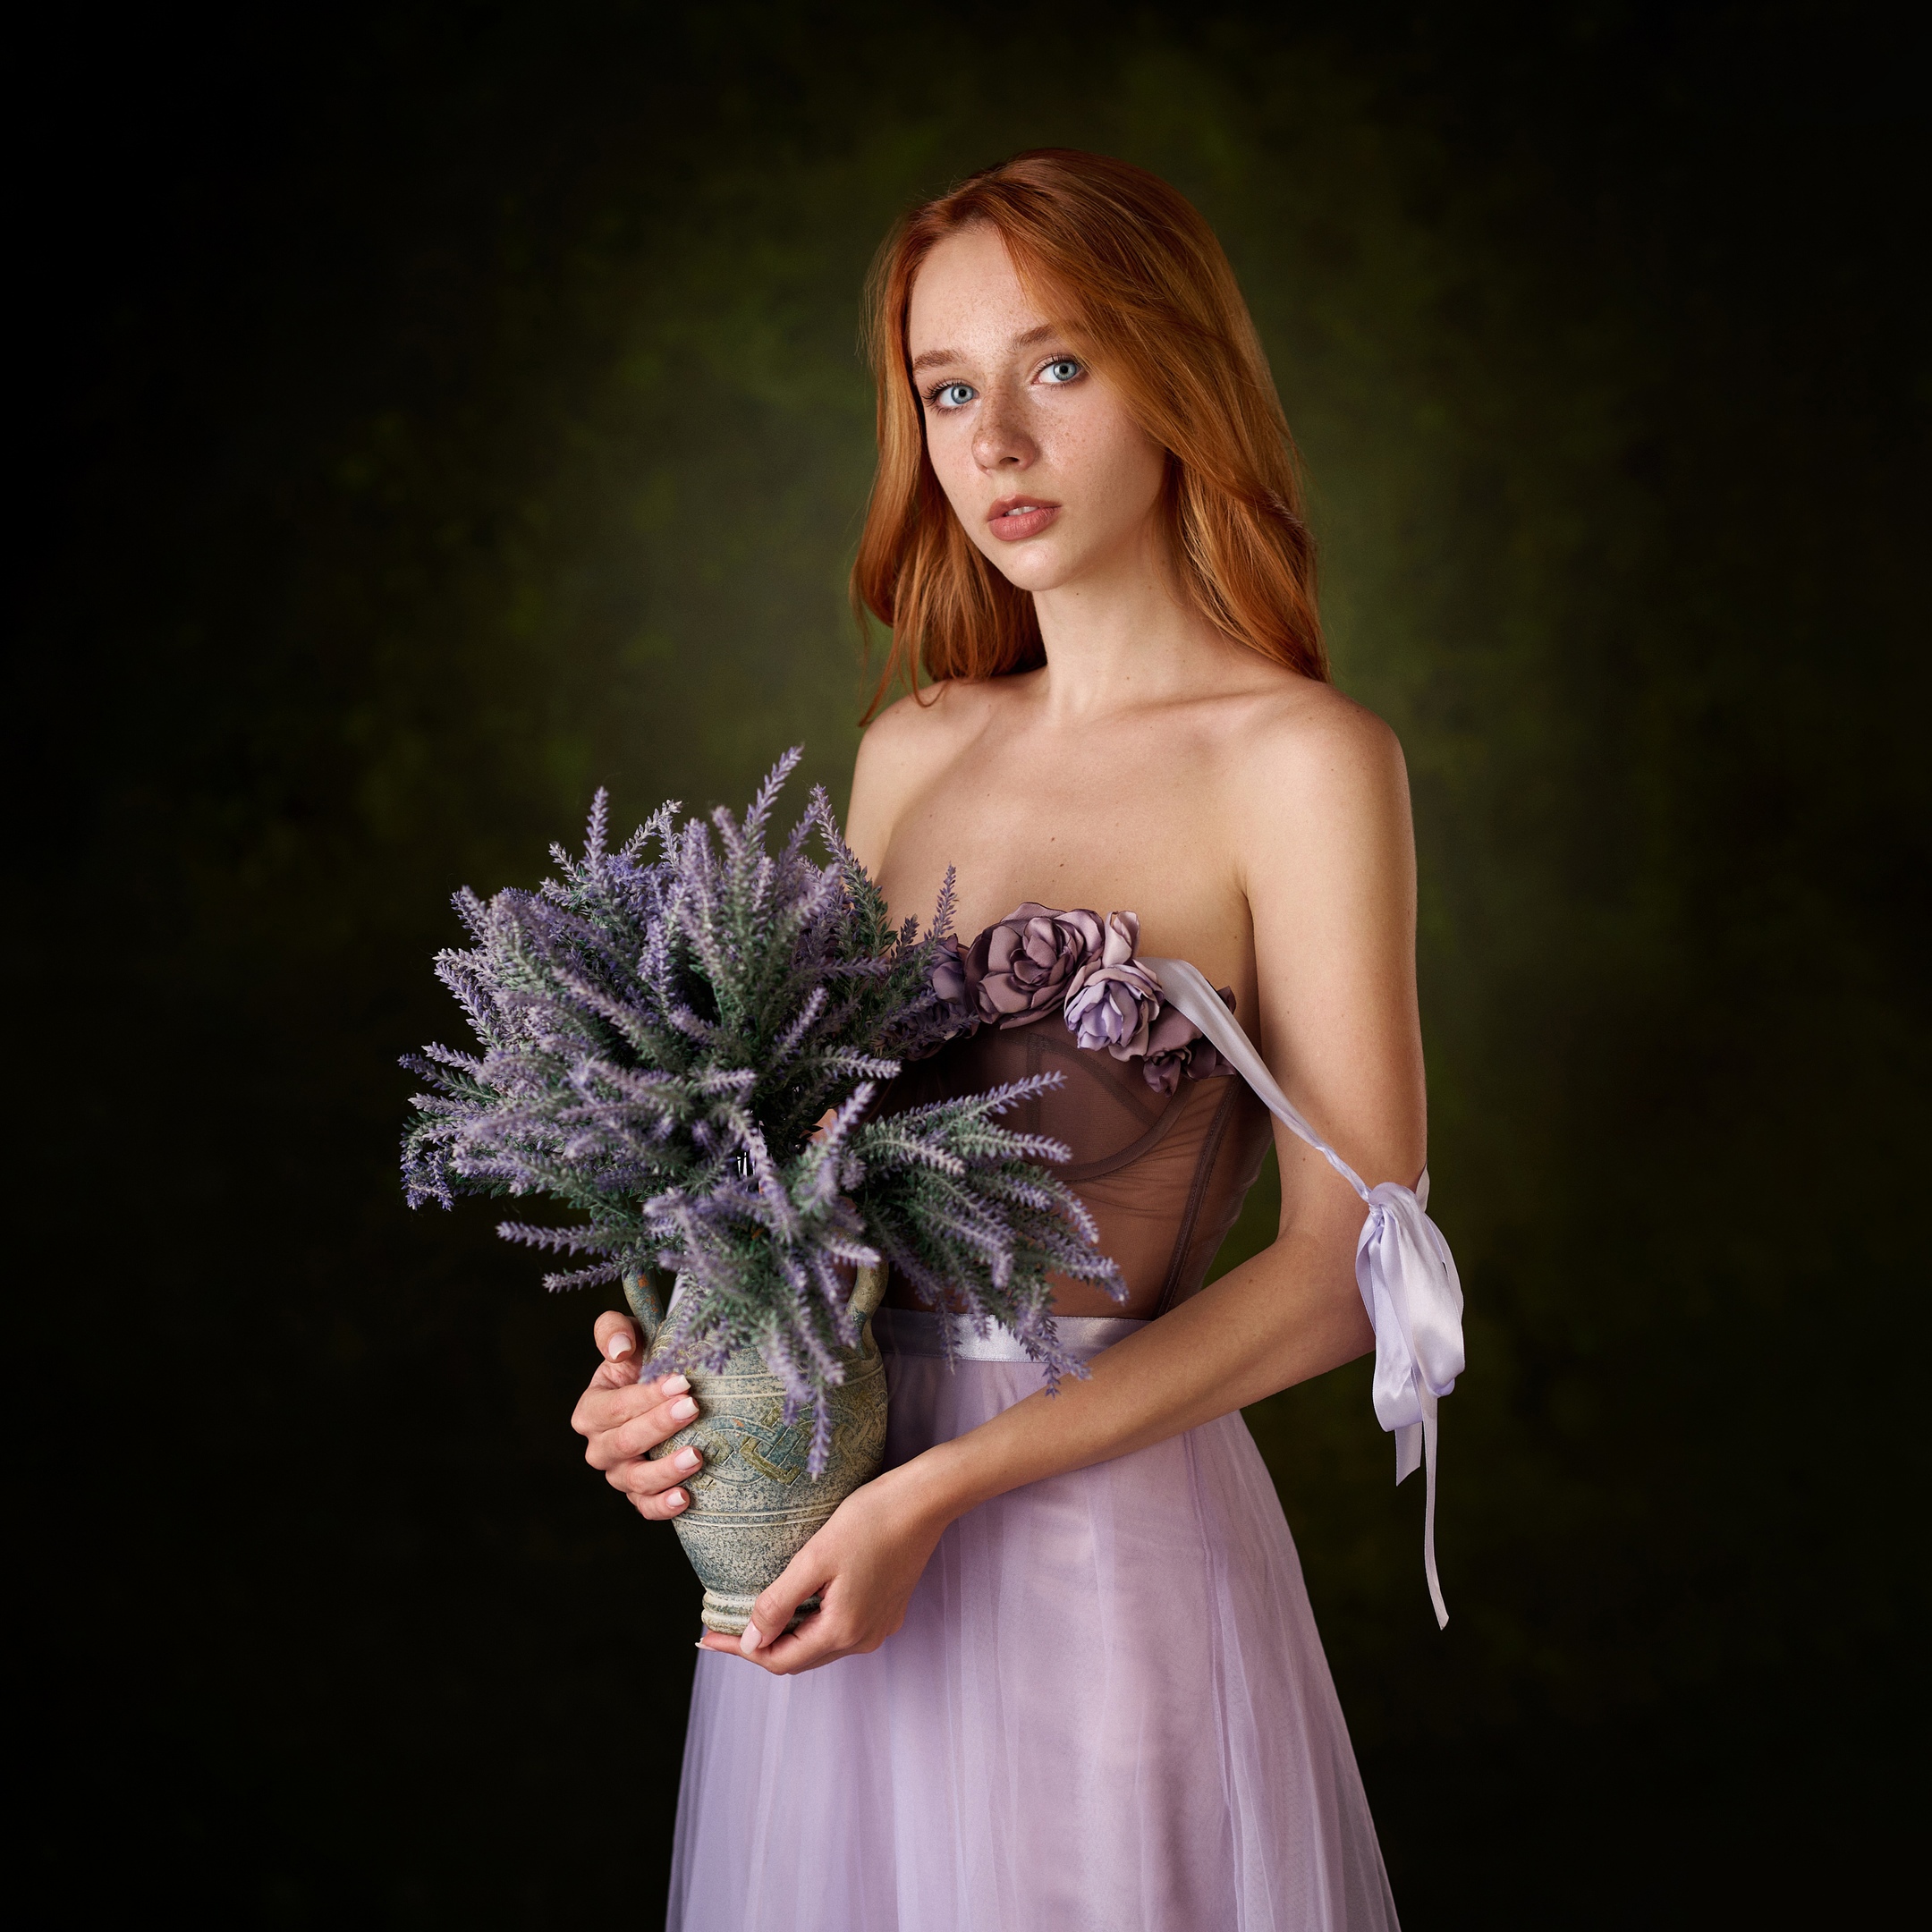 People 2160x2160 Max Pyzhik women Elizaveta Kurilko freckles bare shoulders plants simple background